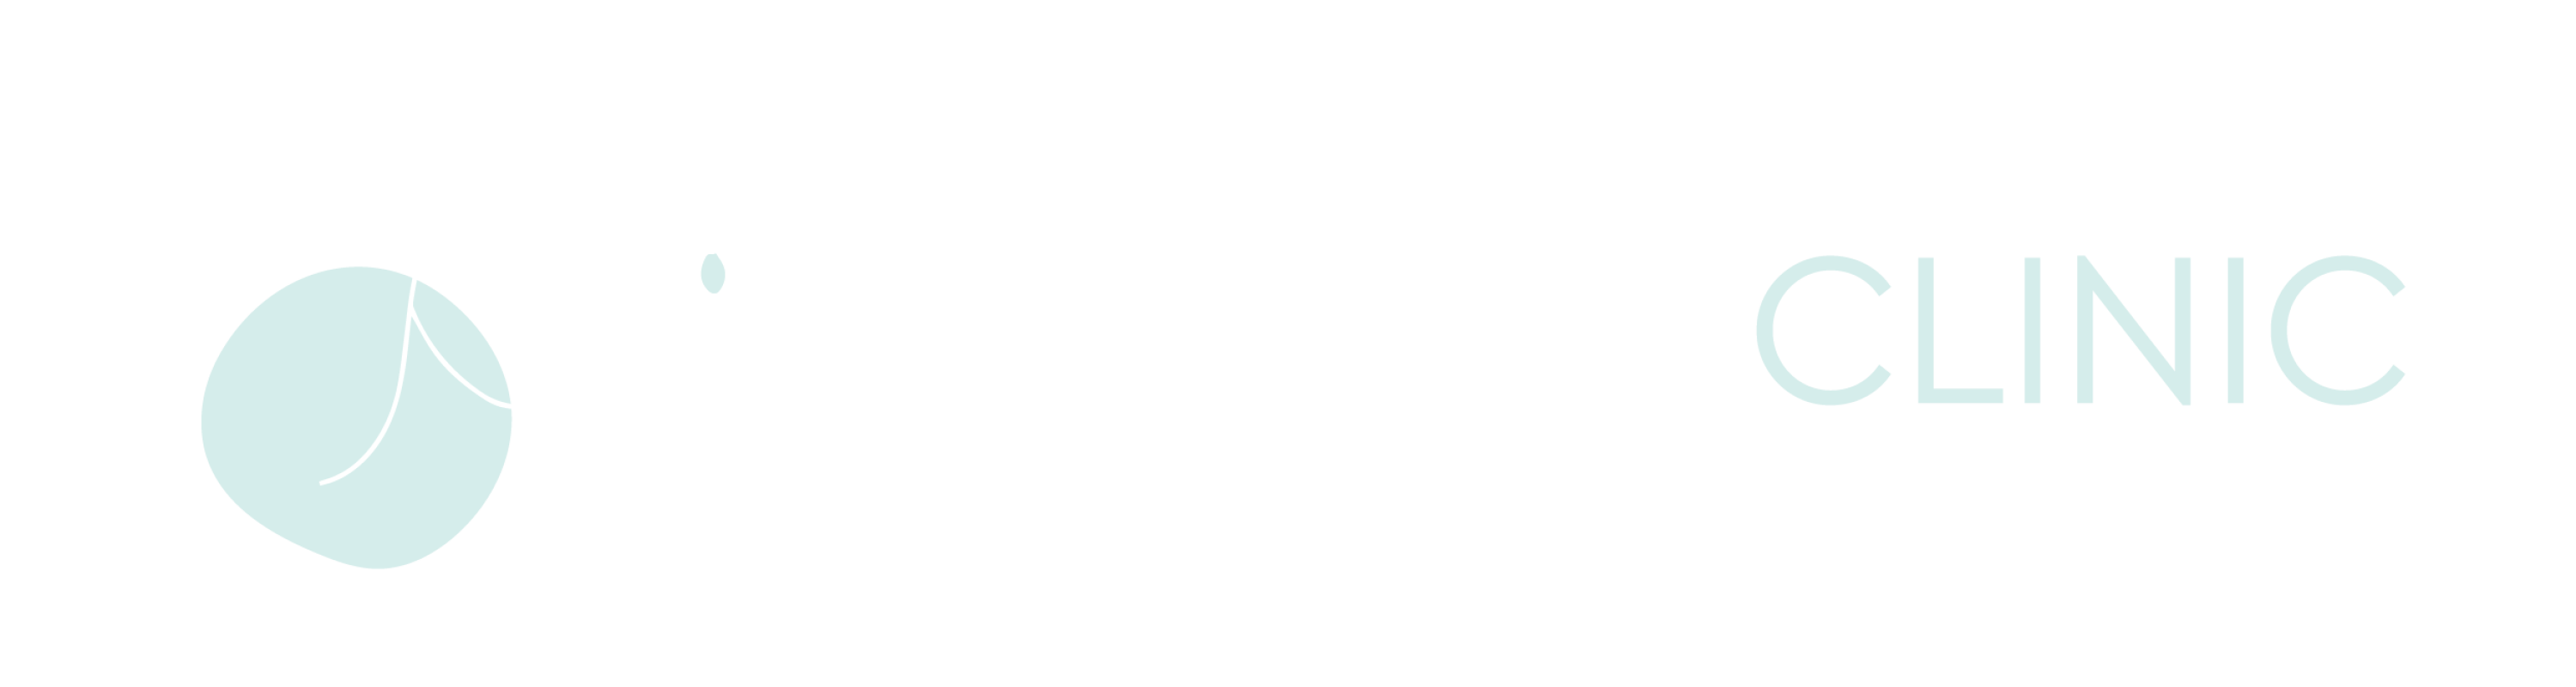 myfaceclinic_logo-white